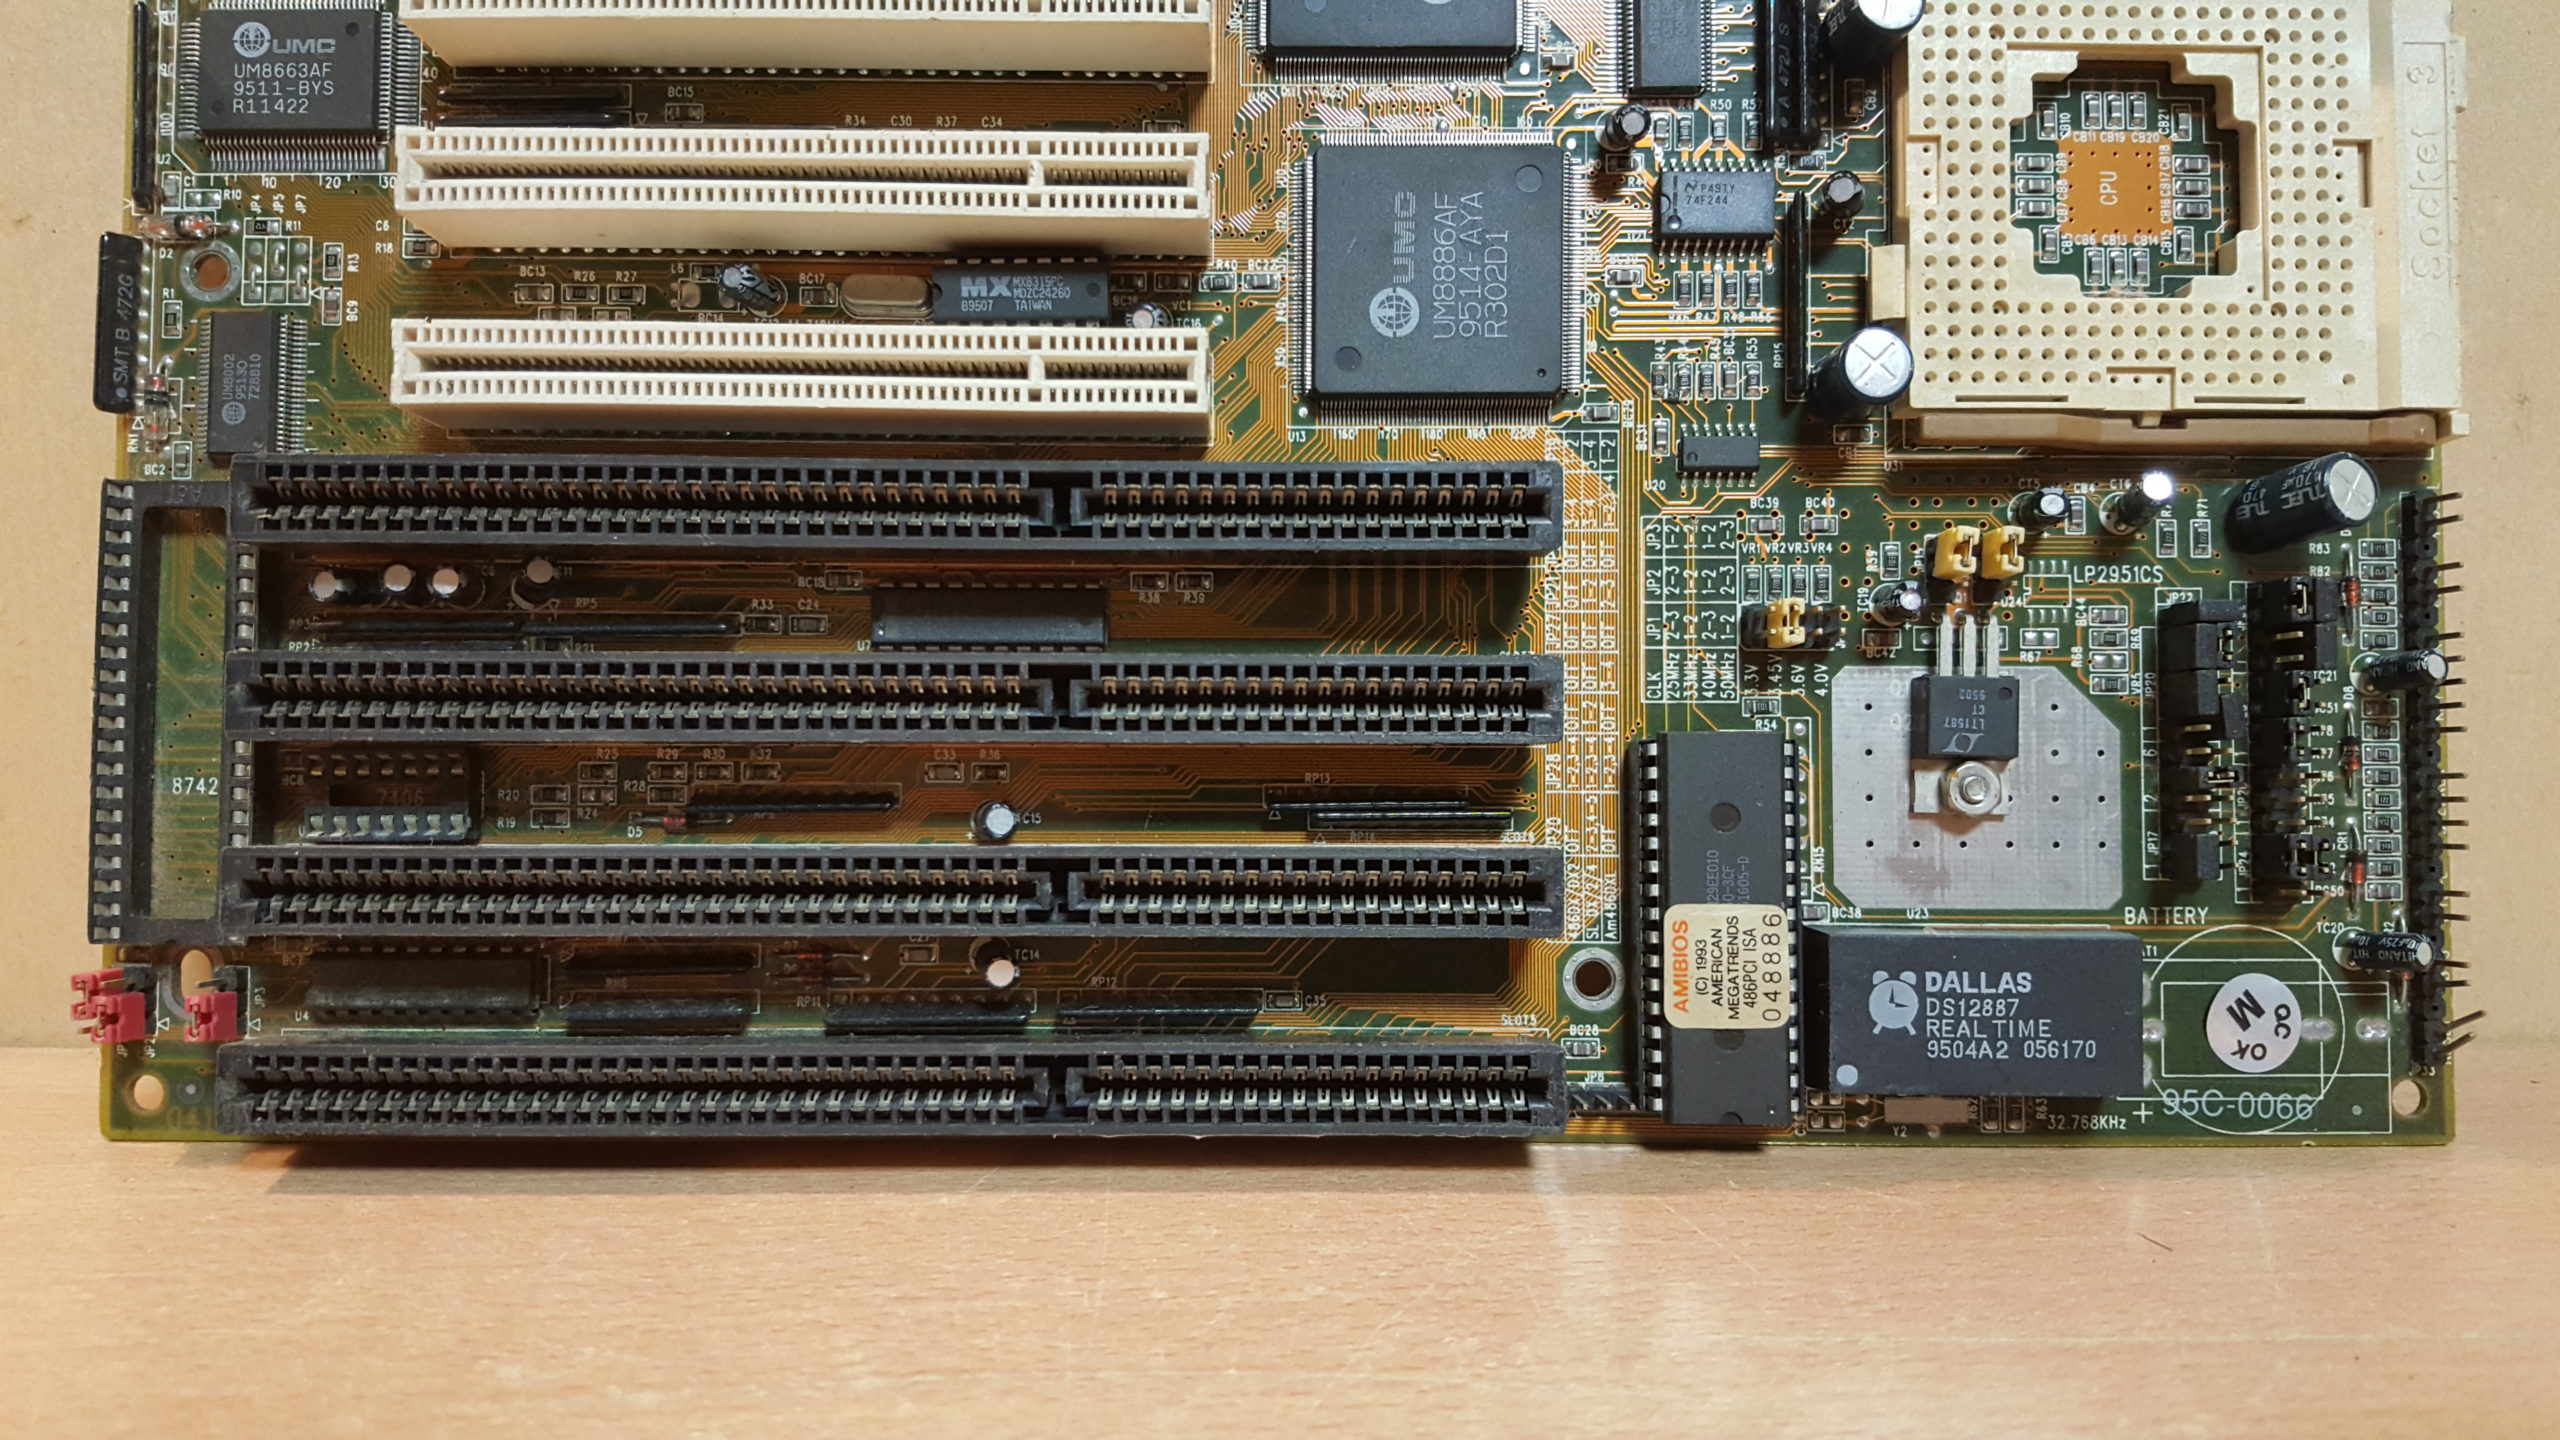 UMC UM8886AF Socket 3 Motherboard with 4 EDO Ram Slots, 4 PCI and 4 ISA